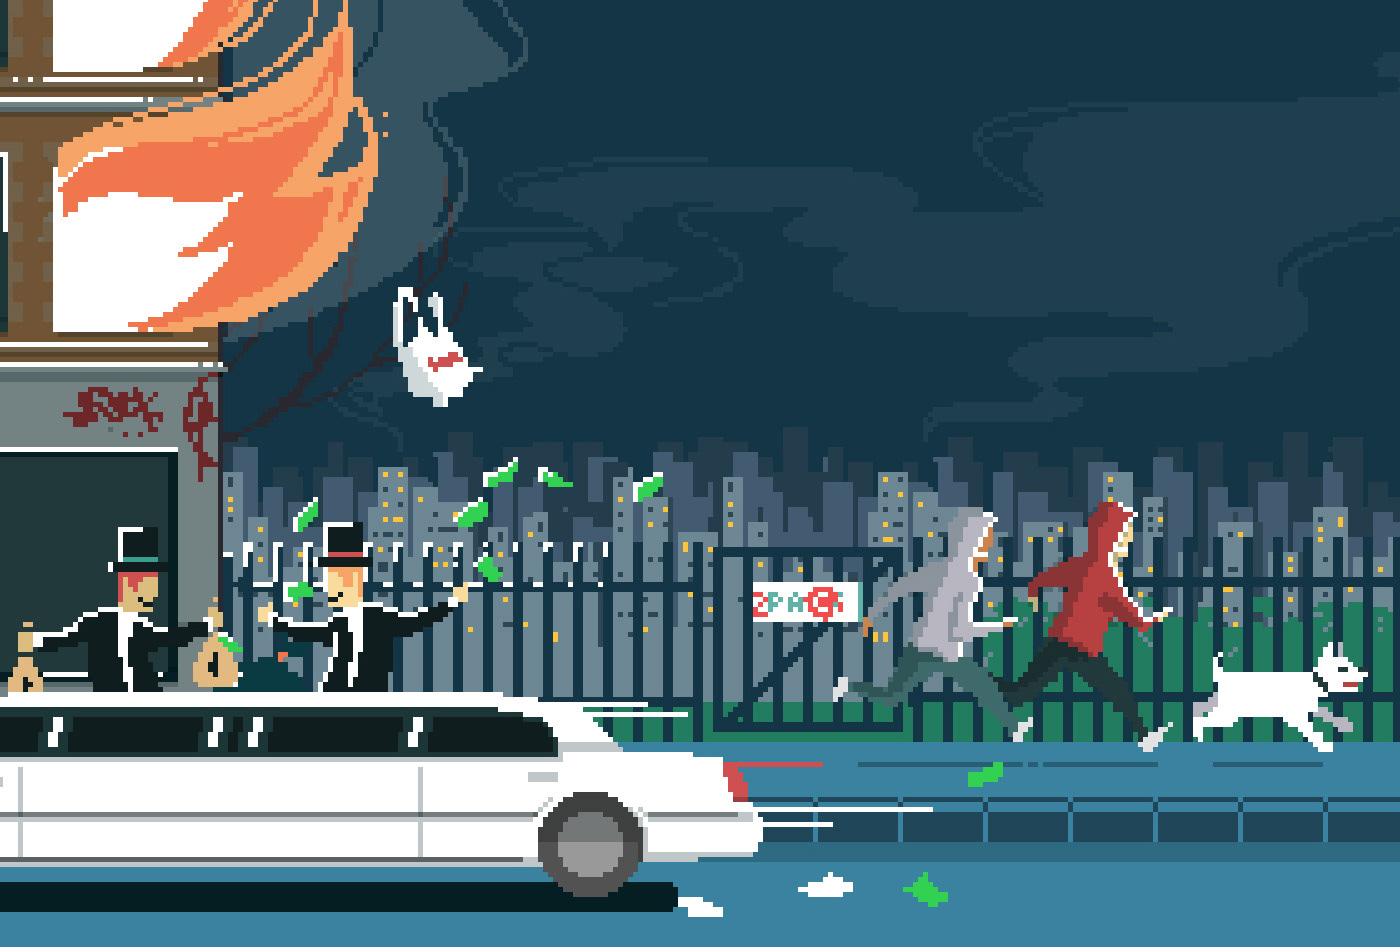 pixel 8bit charity game online game Retro Pixel art politics society